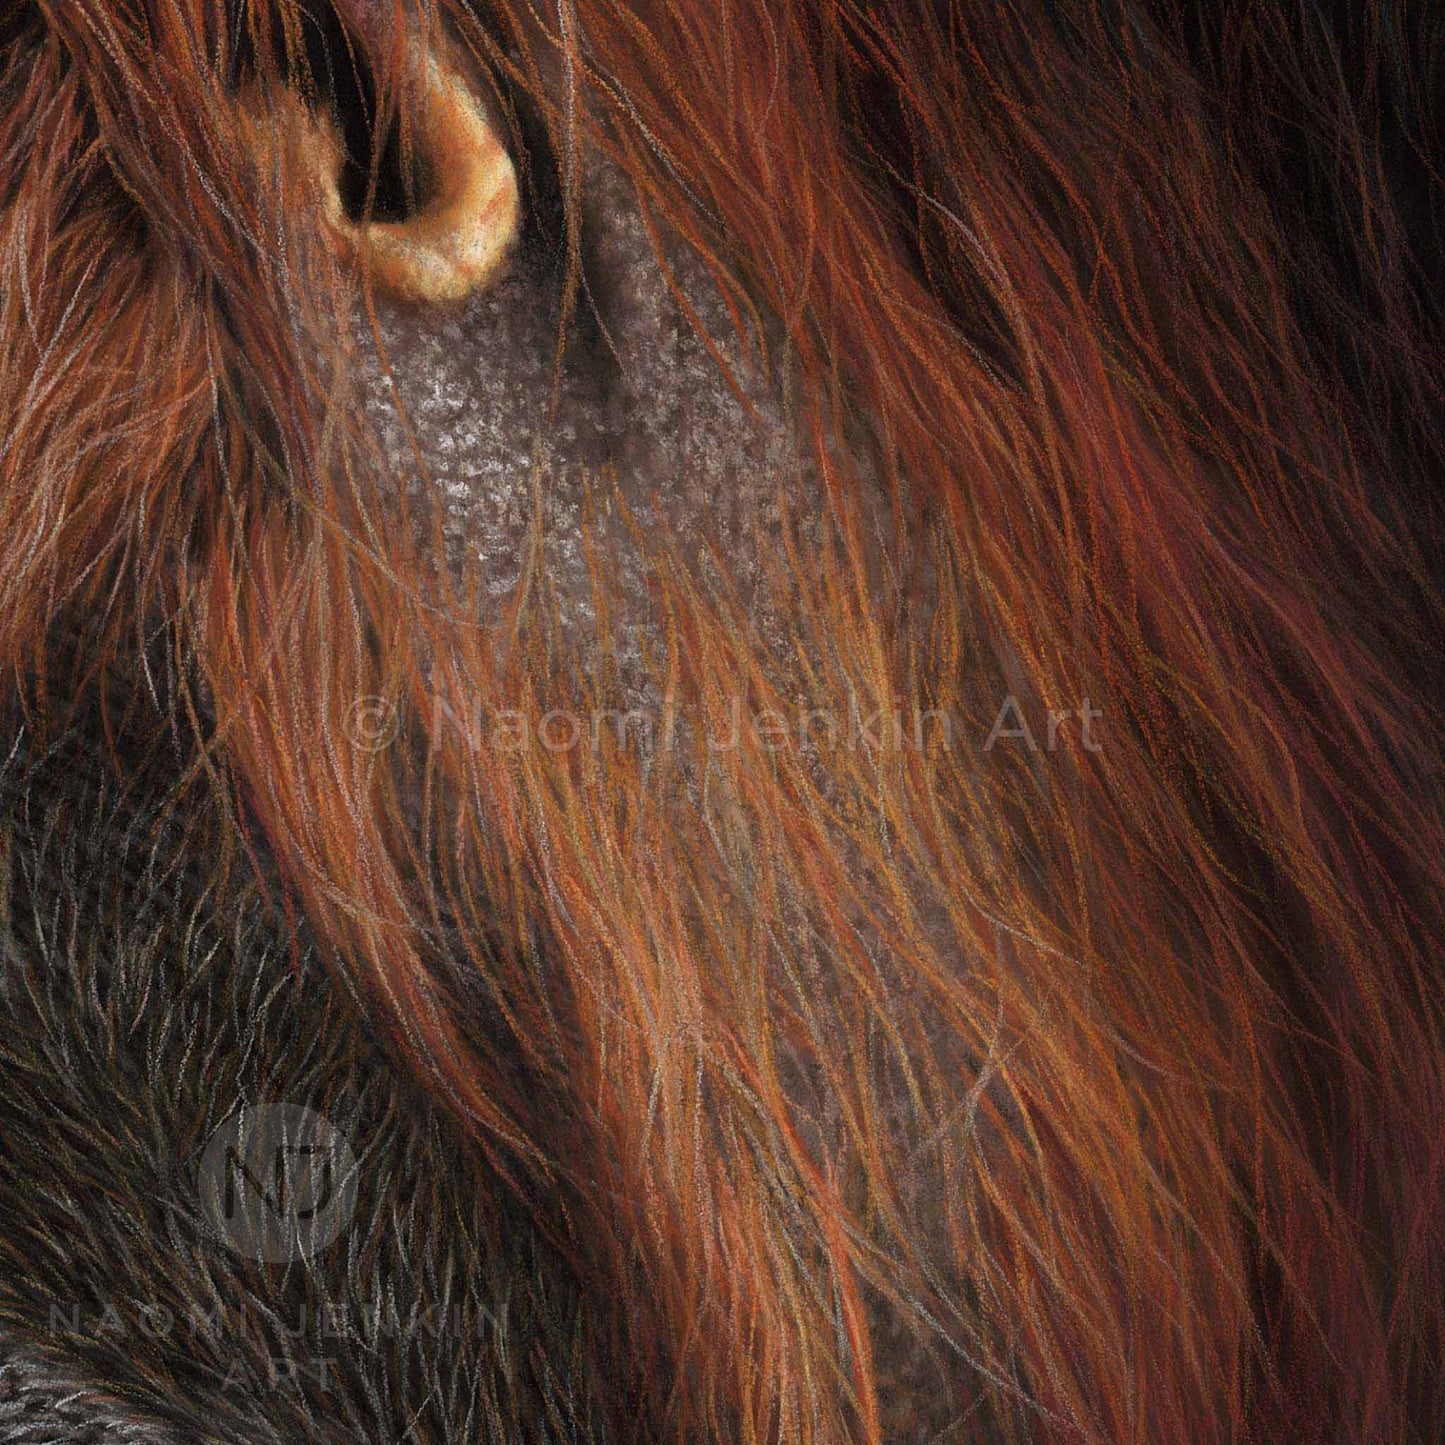 Orangutan art wildlife artist Naomi Jenkin. 